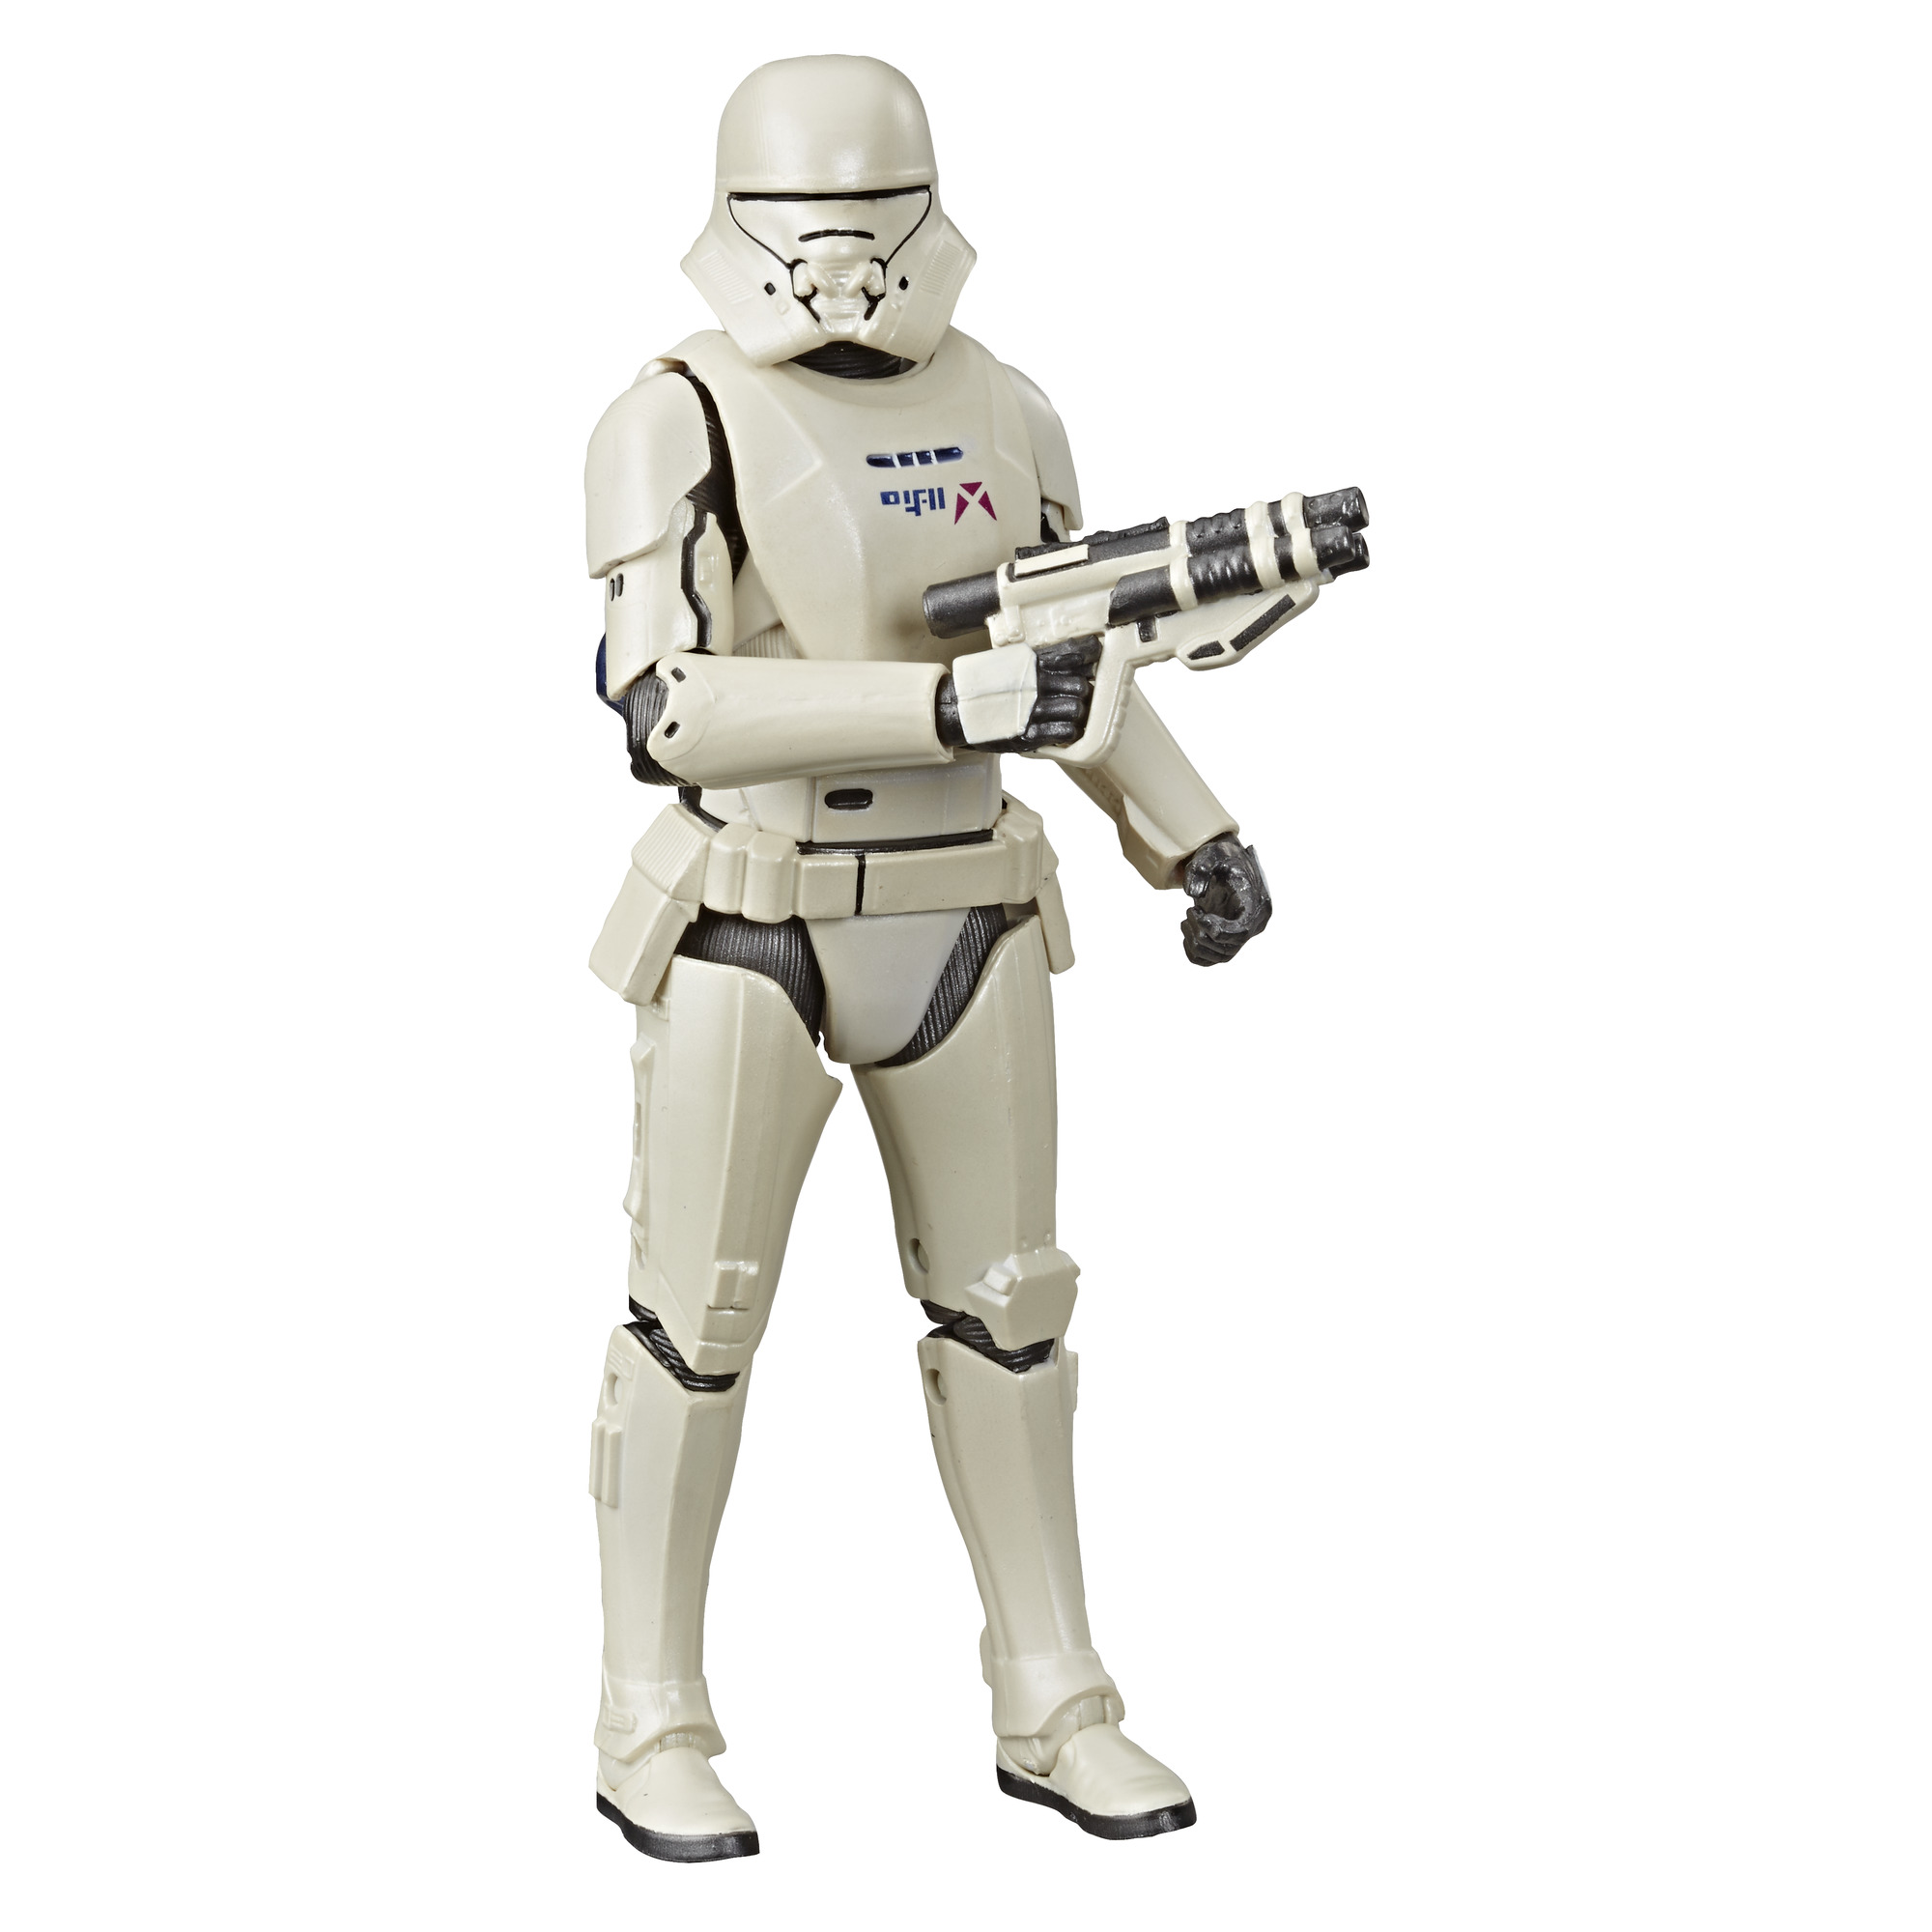 Star Wars First Order Jet Trooper Vinyl Figure for sale online Movies Funko Pop